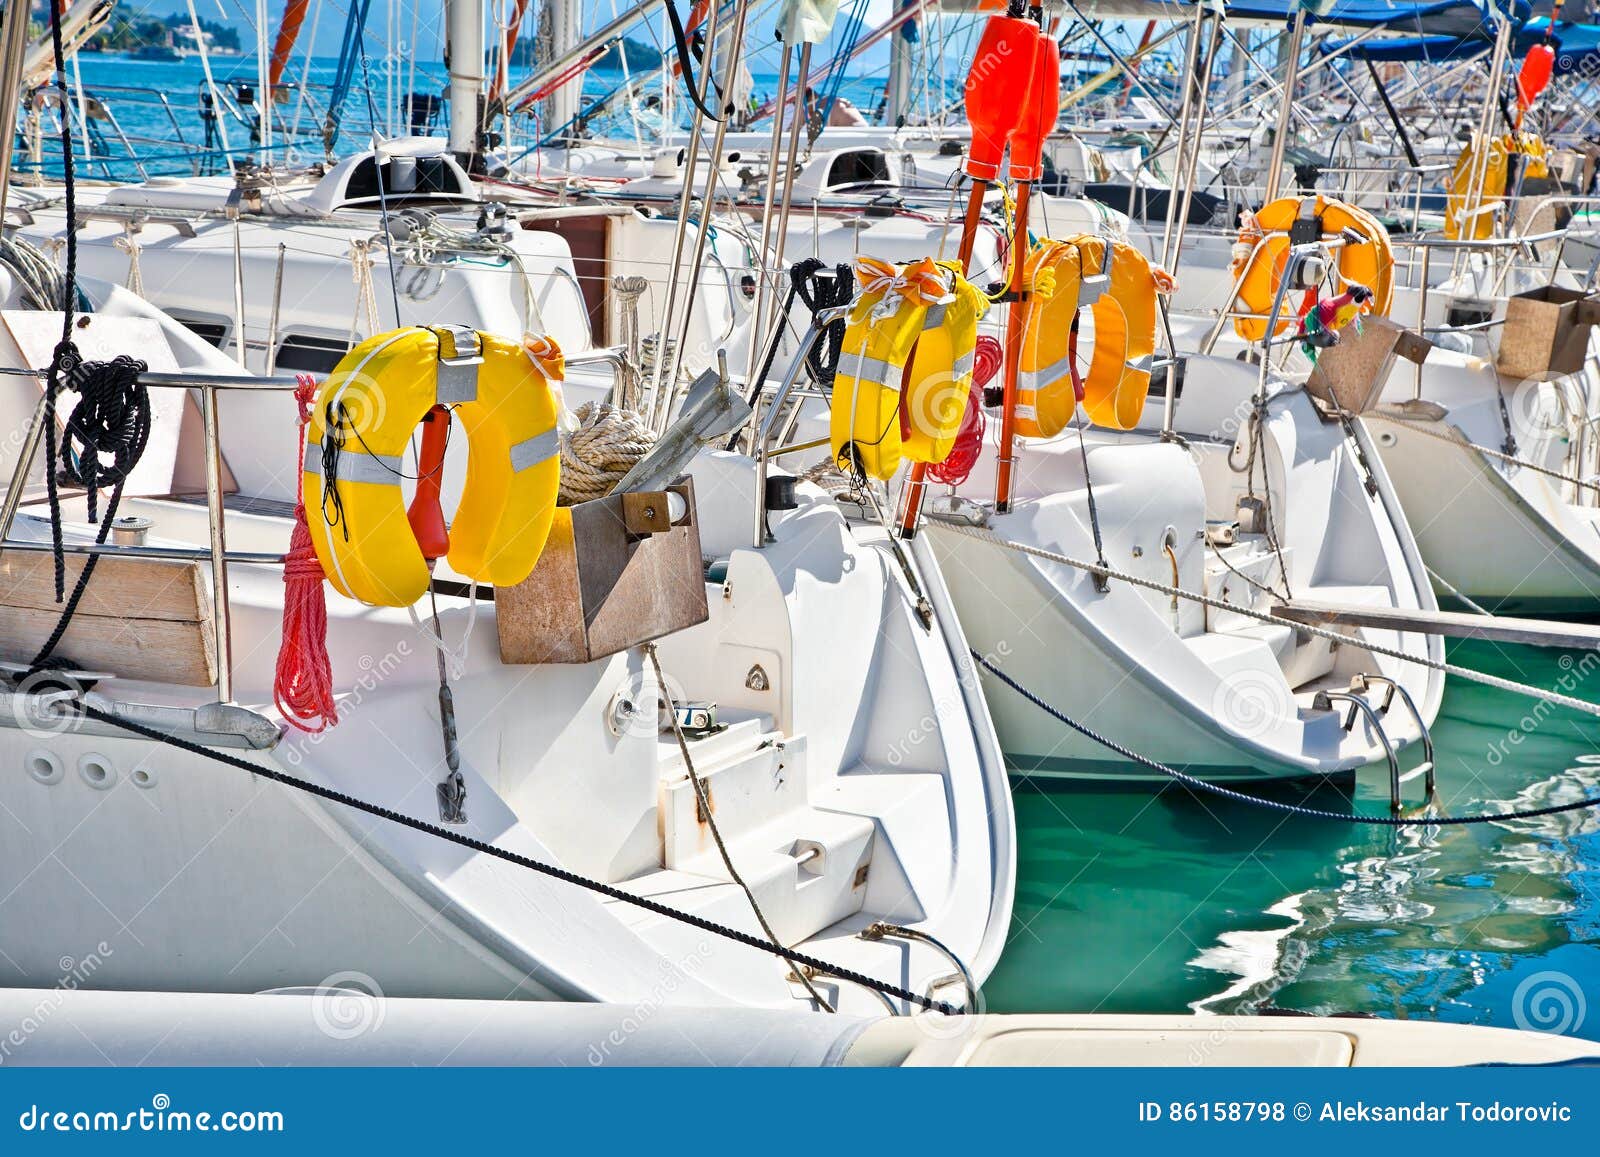 yacht , sailboat in nydri, greece.